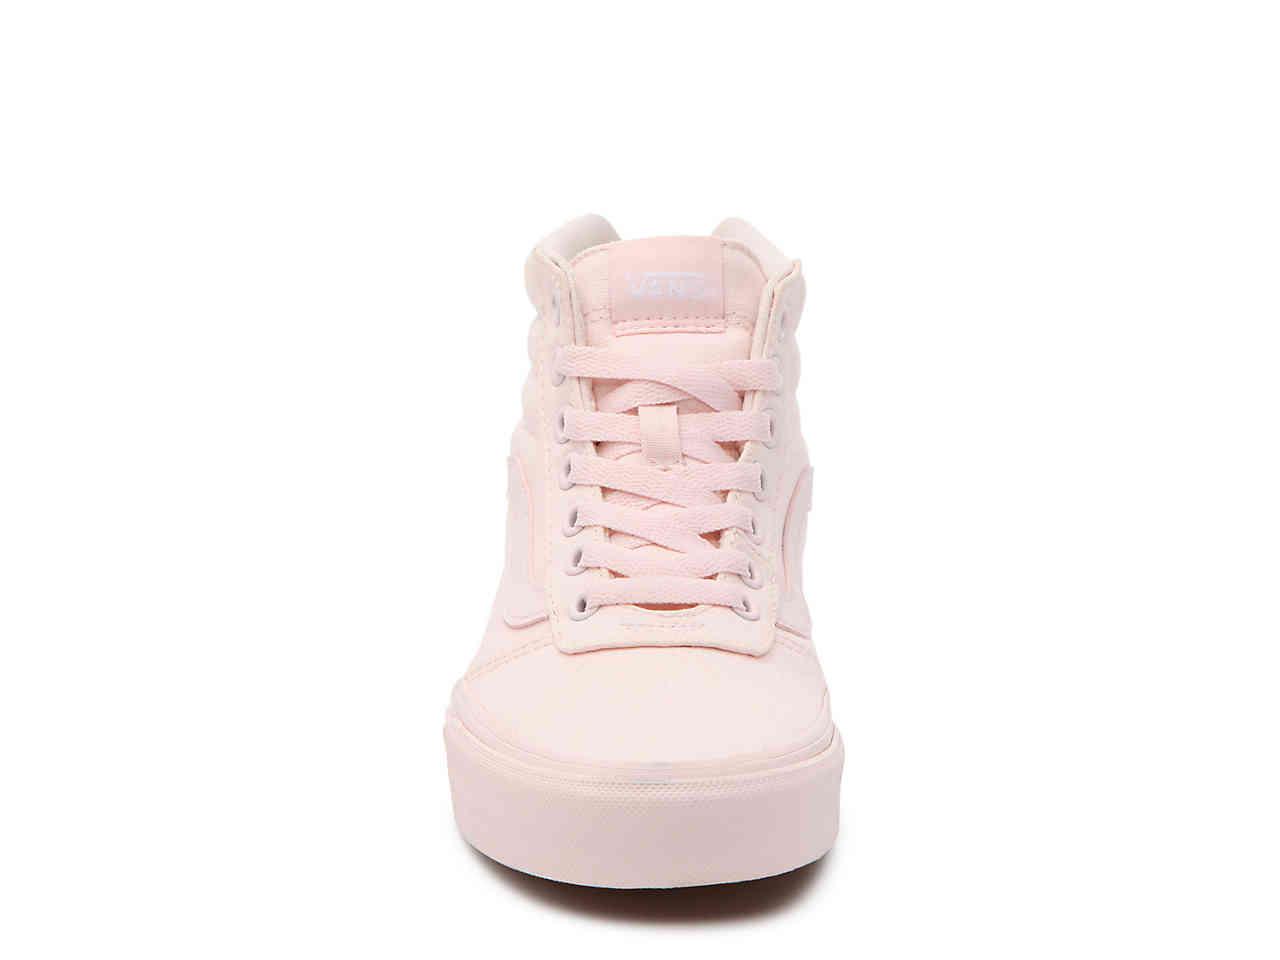 Vans Canvas Ward Hi High-top Sneaker in Light Pink (Pink) | Lyst